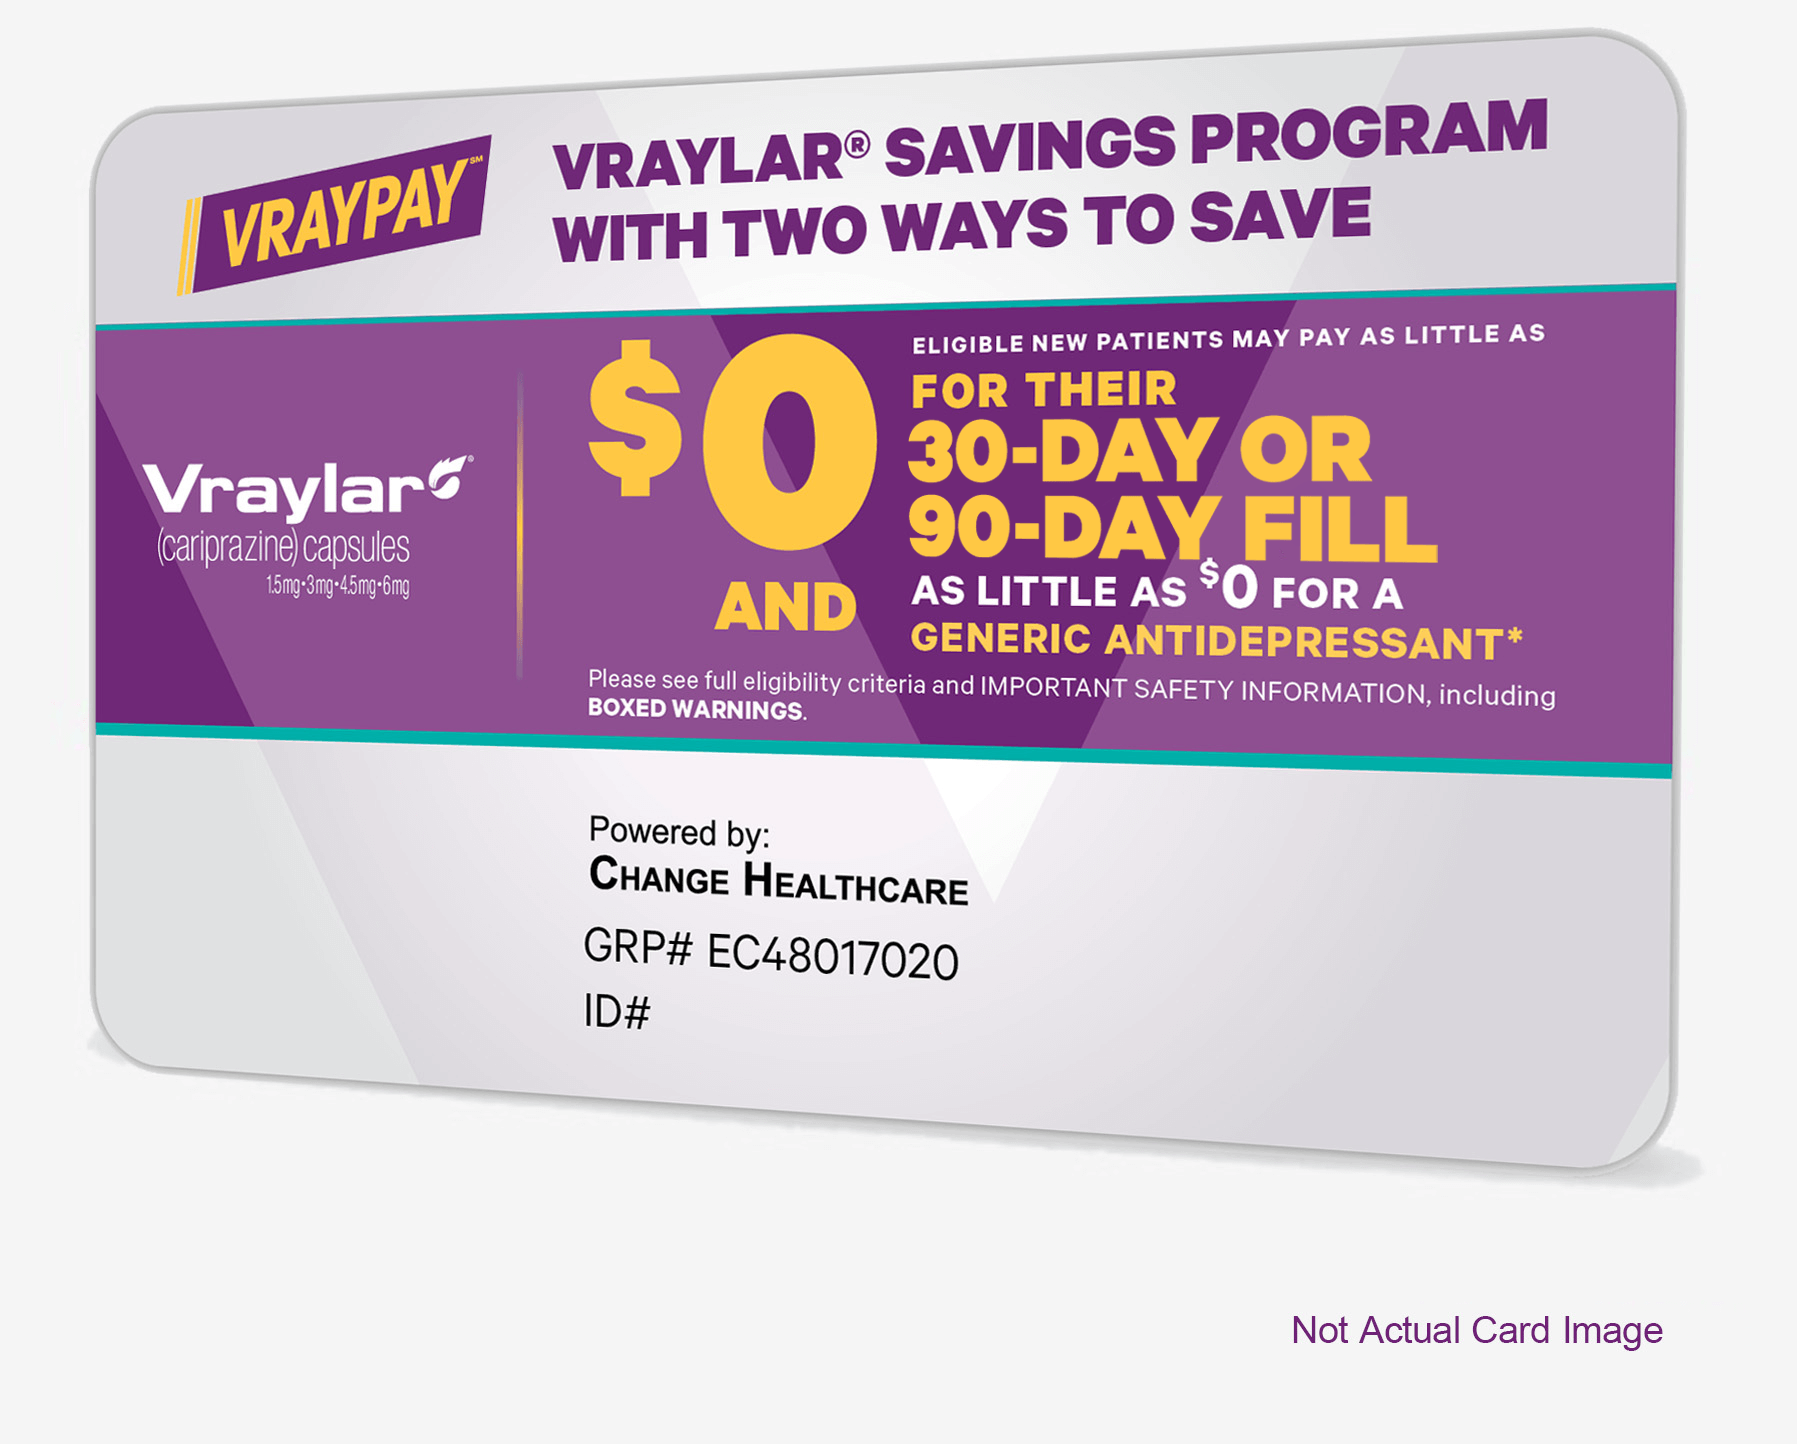 Two Ways to Save VRAYLAR Savings Program Card.